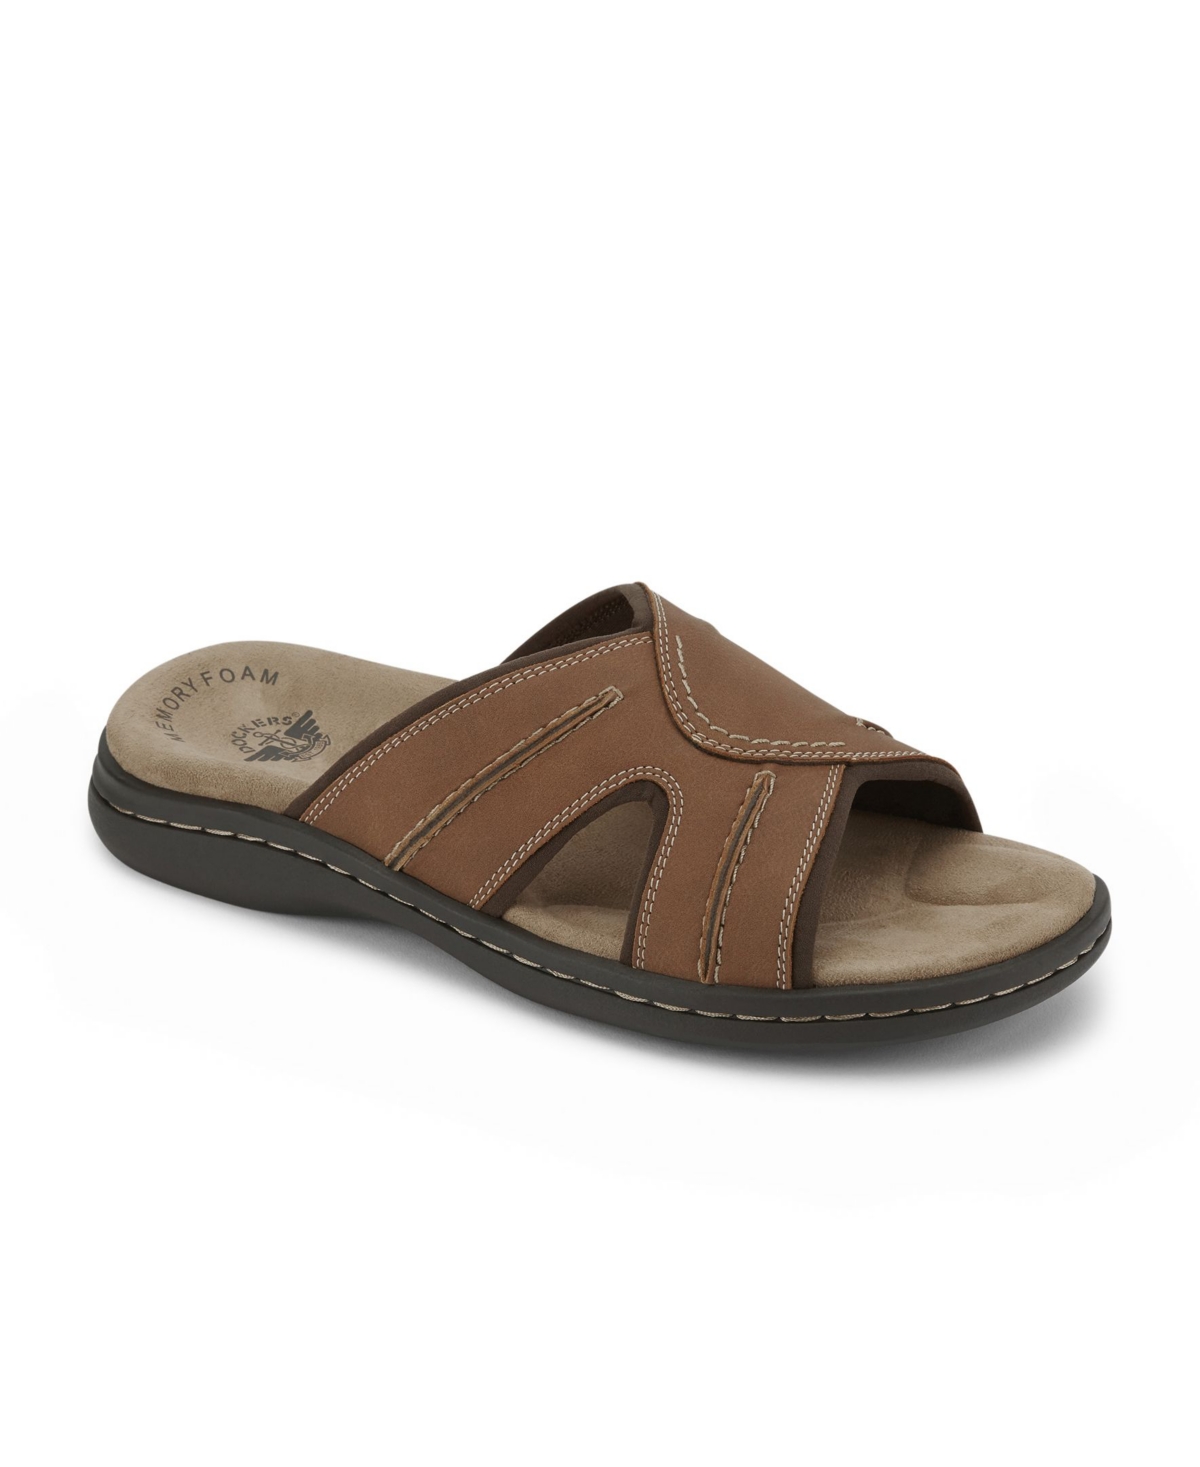 Men's Sunland Leather Sandals - Rust